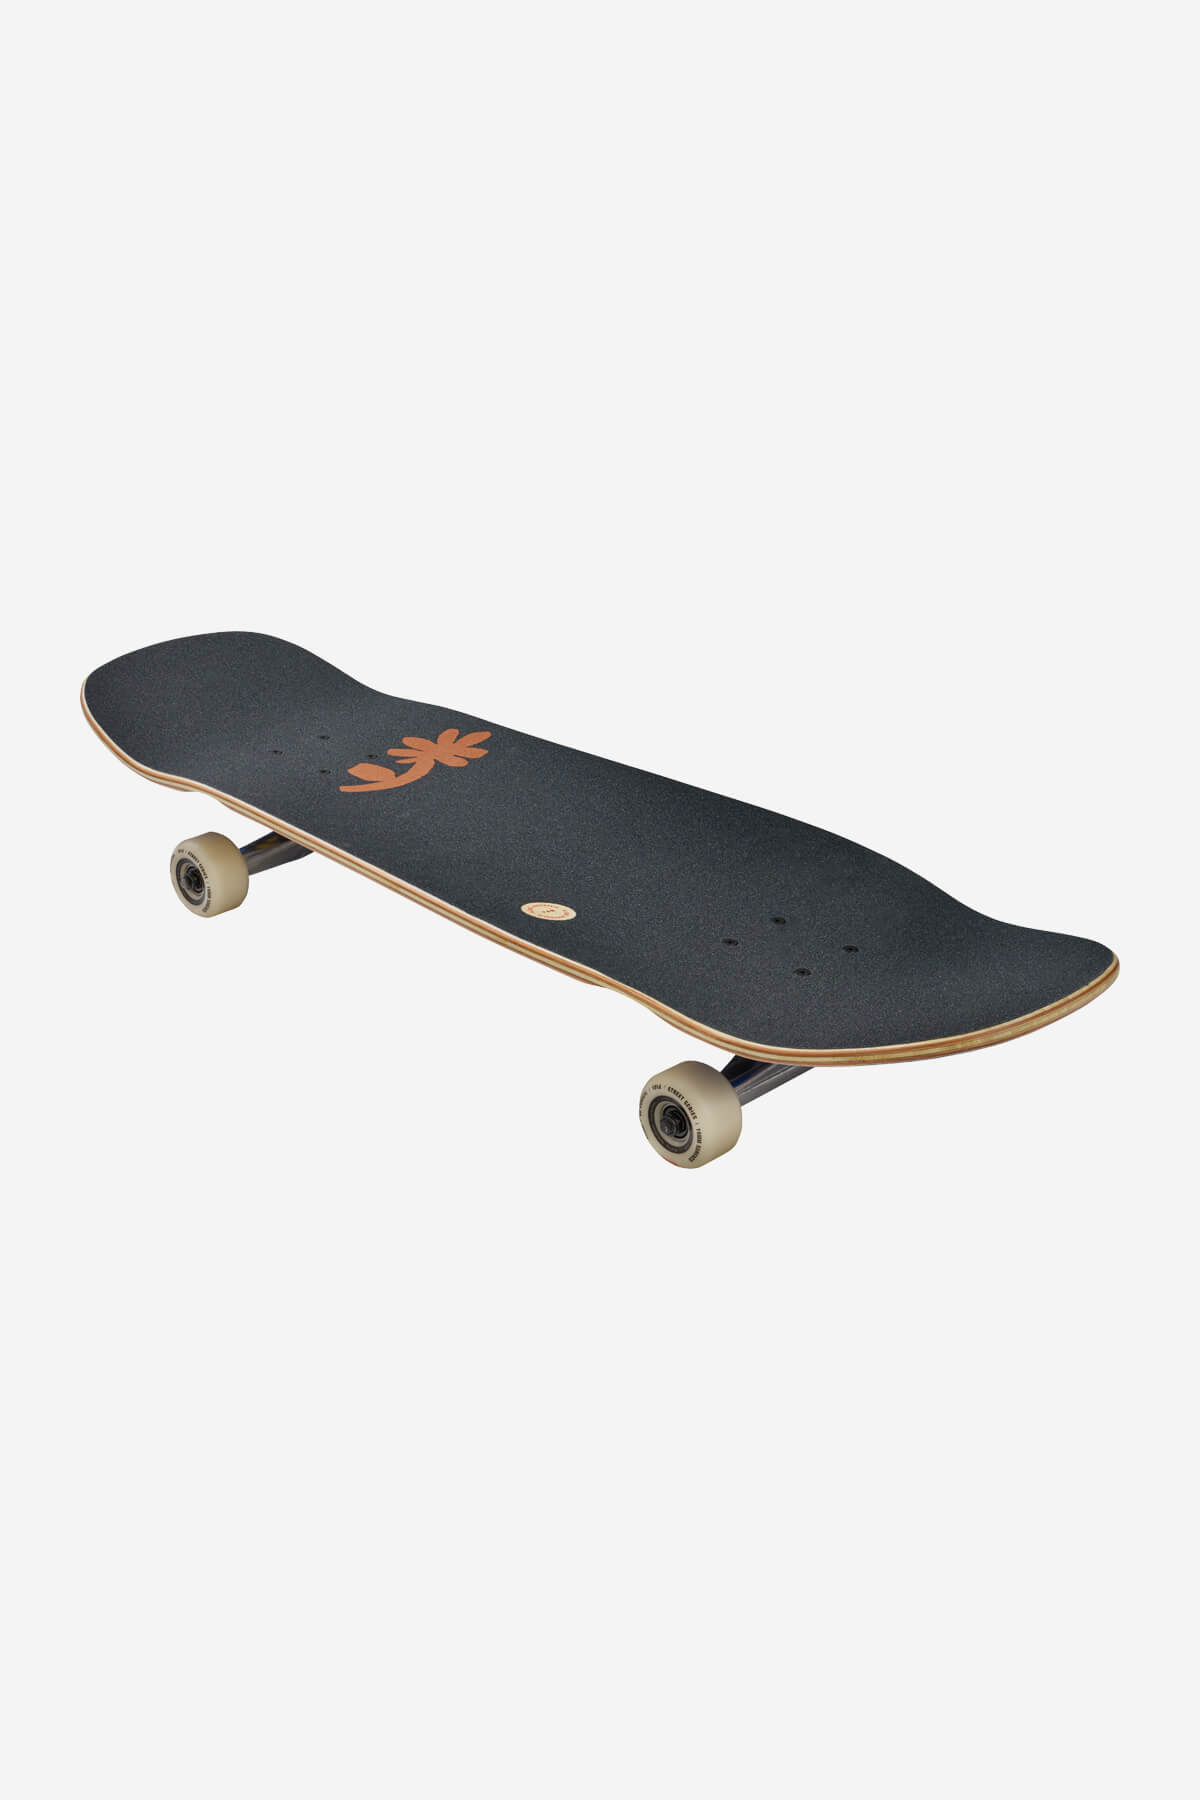 Globe - Huntsman - Bambou/Play - 9.75" complet Skateboard